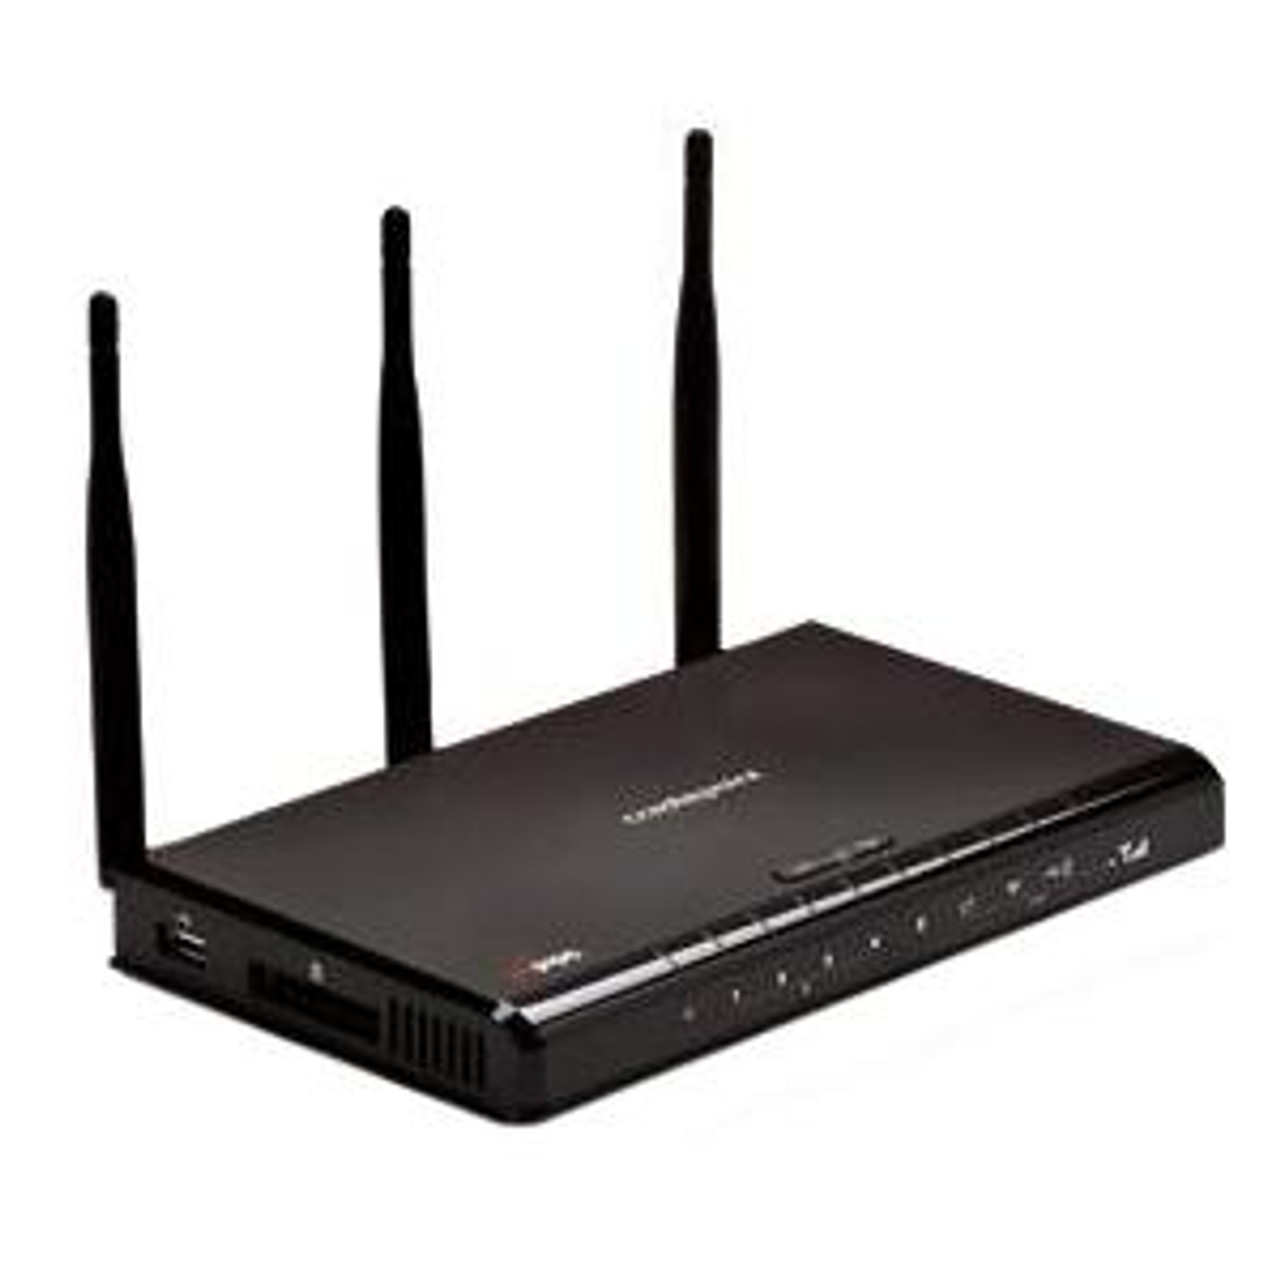 MBR1100 CradlePoint Wireless Broadband Router 54 Mbps 4 x 10/100Base-TX Network LAN 1 x 10/100Base-TX Network WAN 1 x ExpressCard IEEE 802.11n (draft)